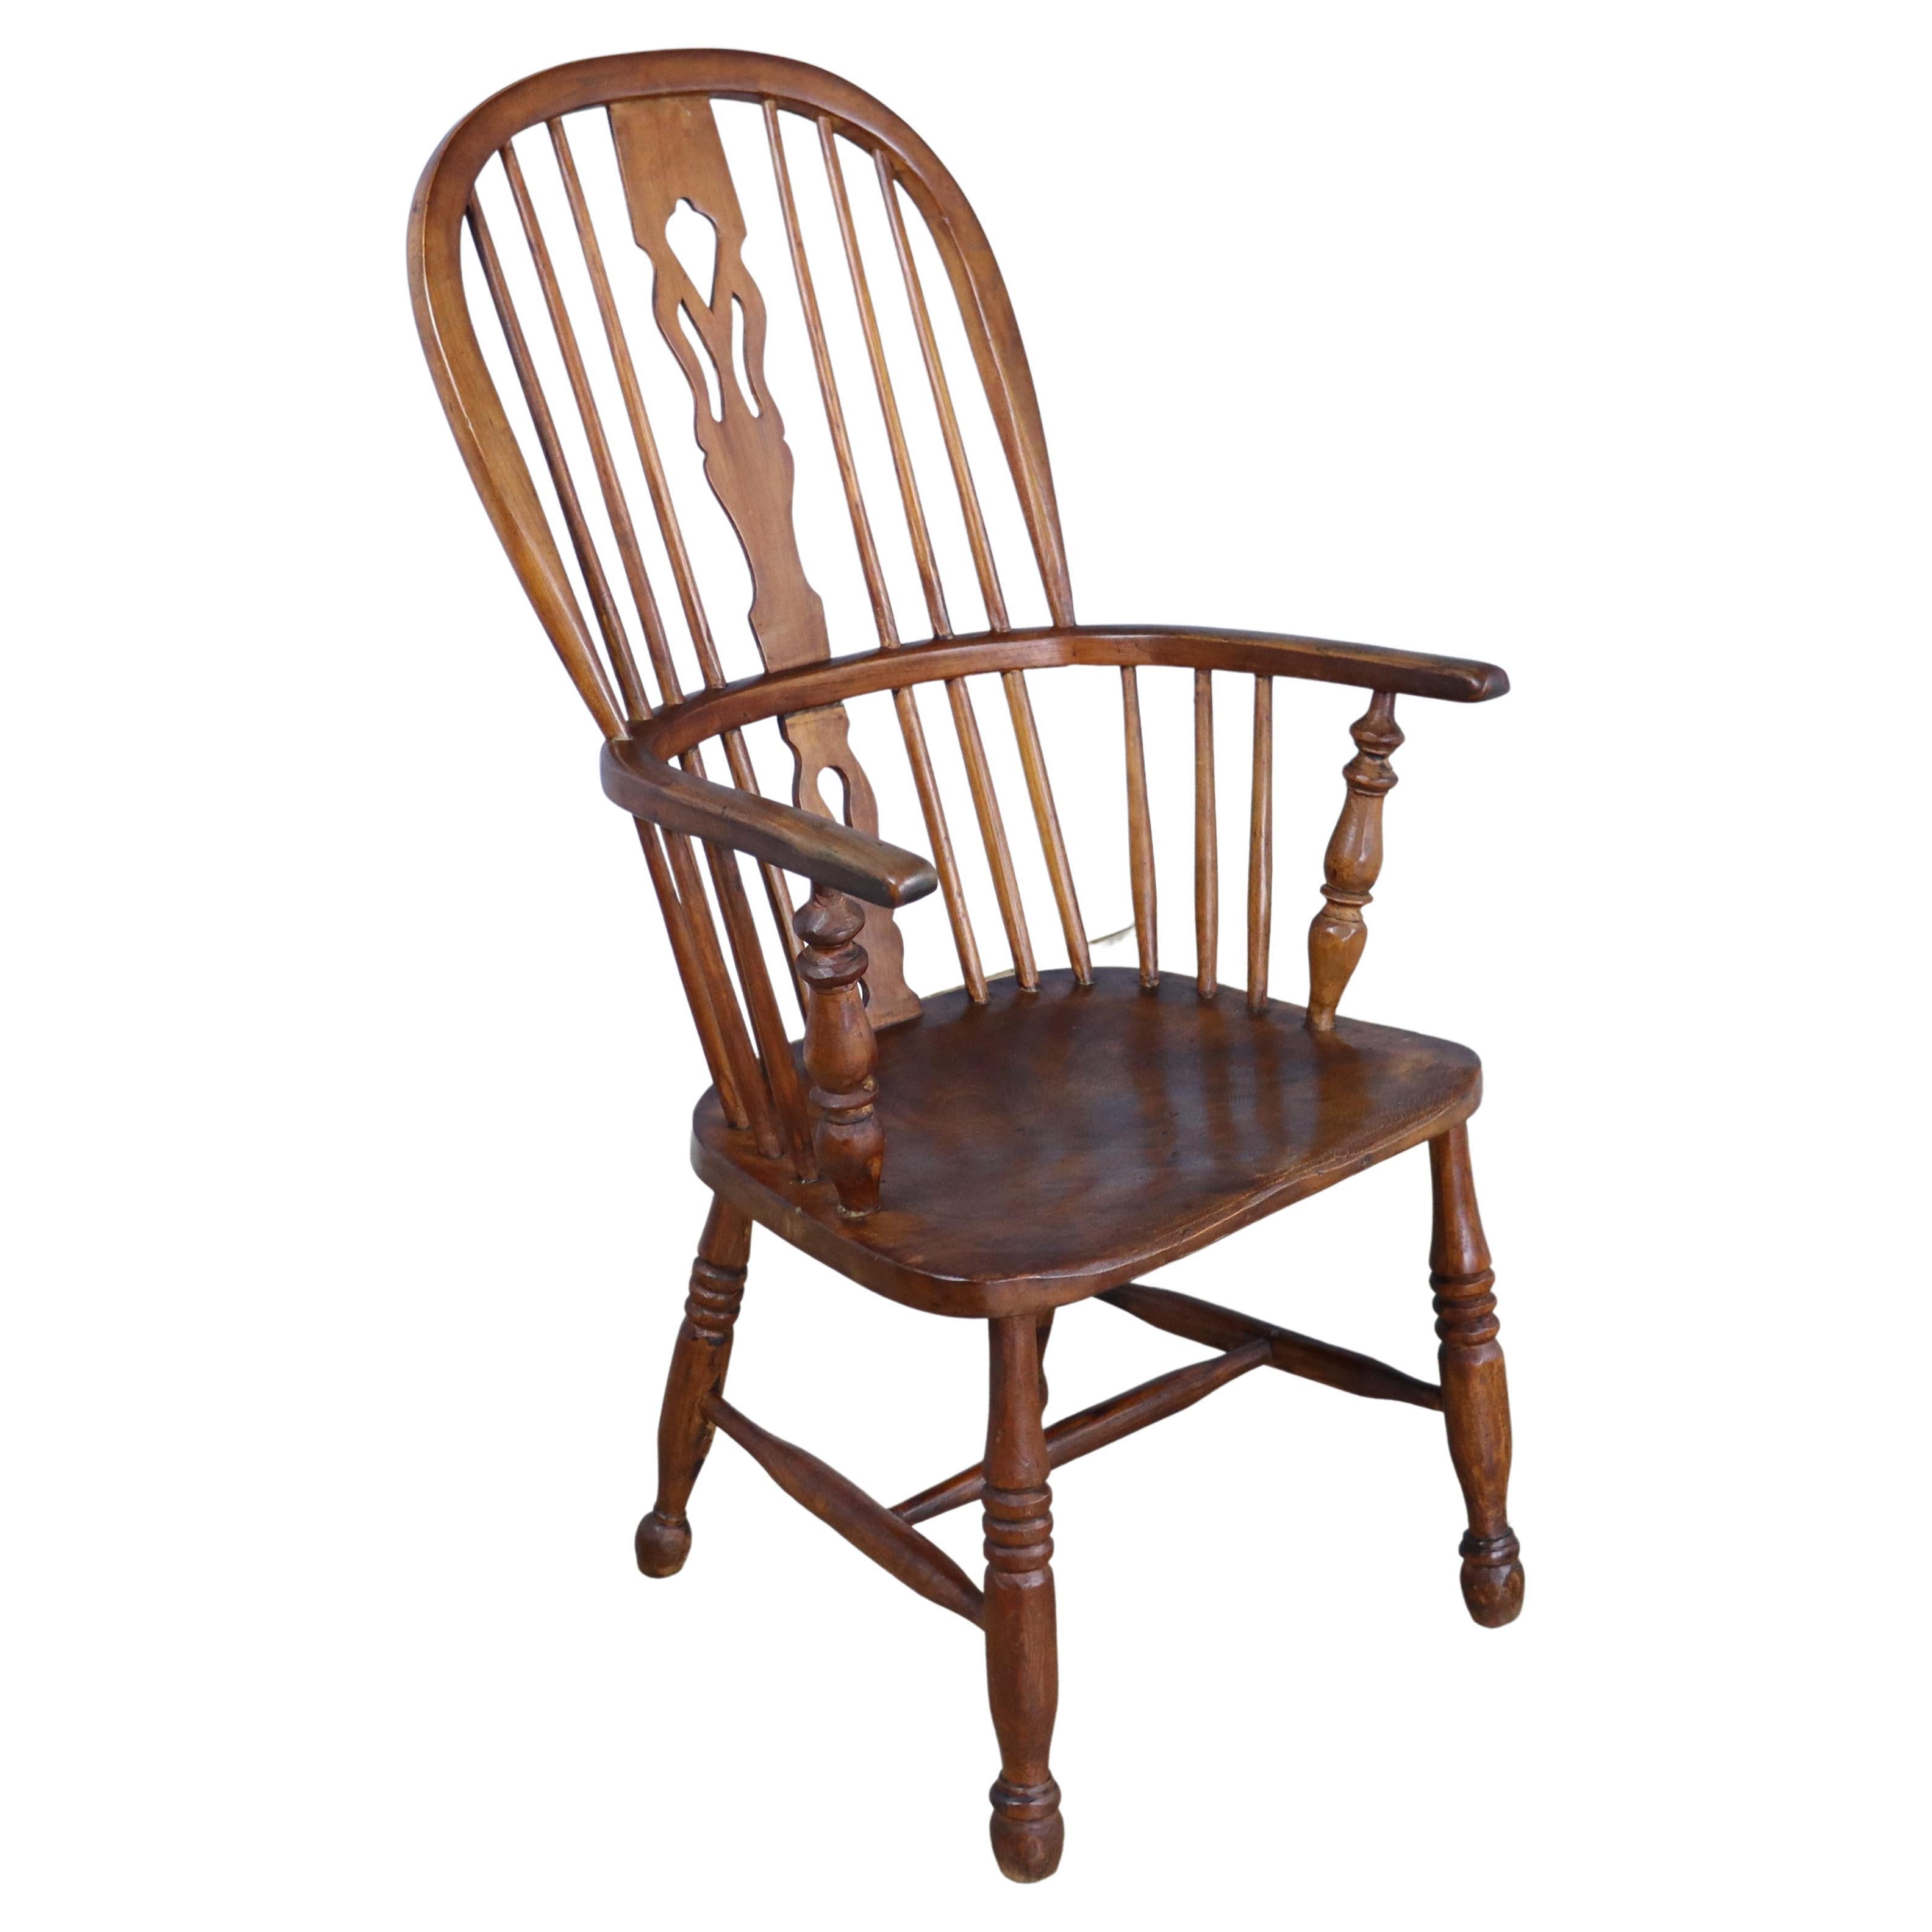 19th Century English Fruitwood Windsor Chair, Fiddleback Splat